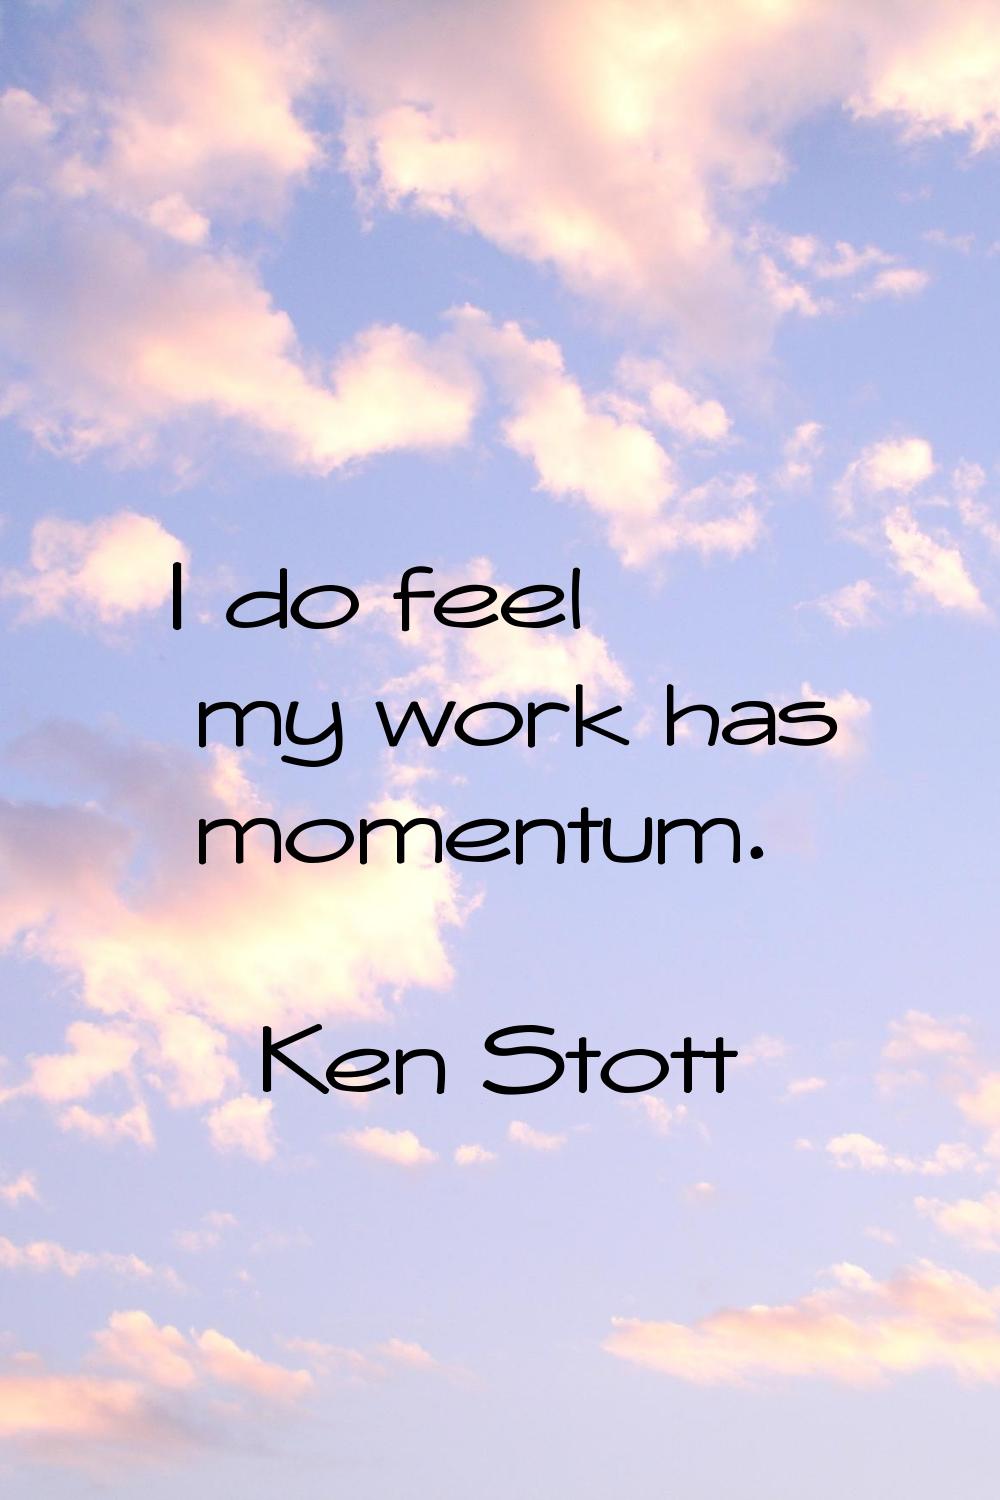 I do feel my work has momentum.